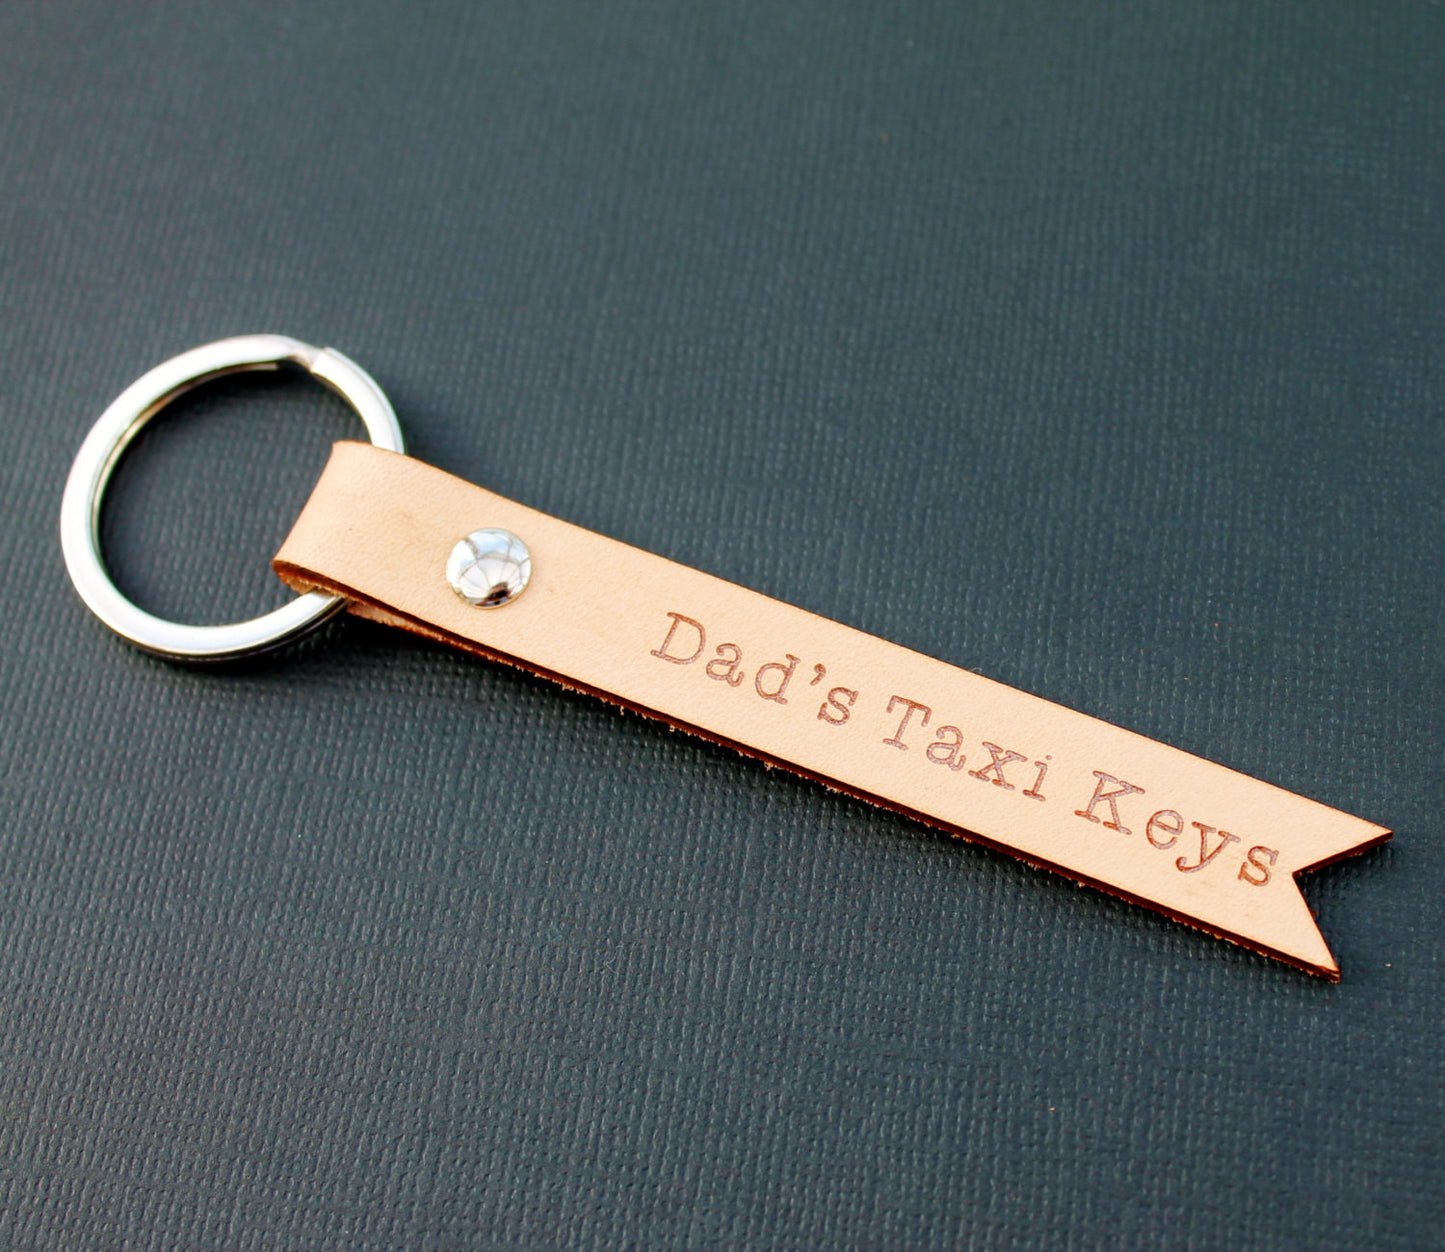 Dads Taxi Keys Leather Keychain Keyring